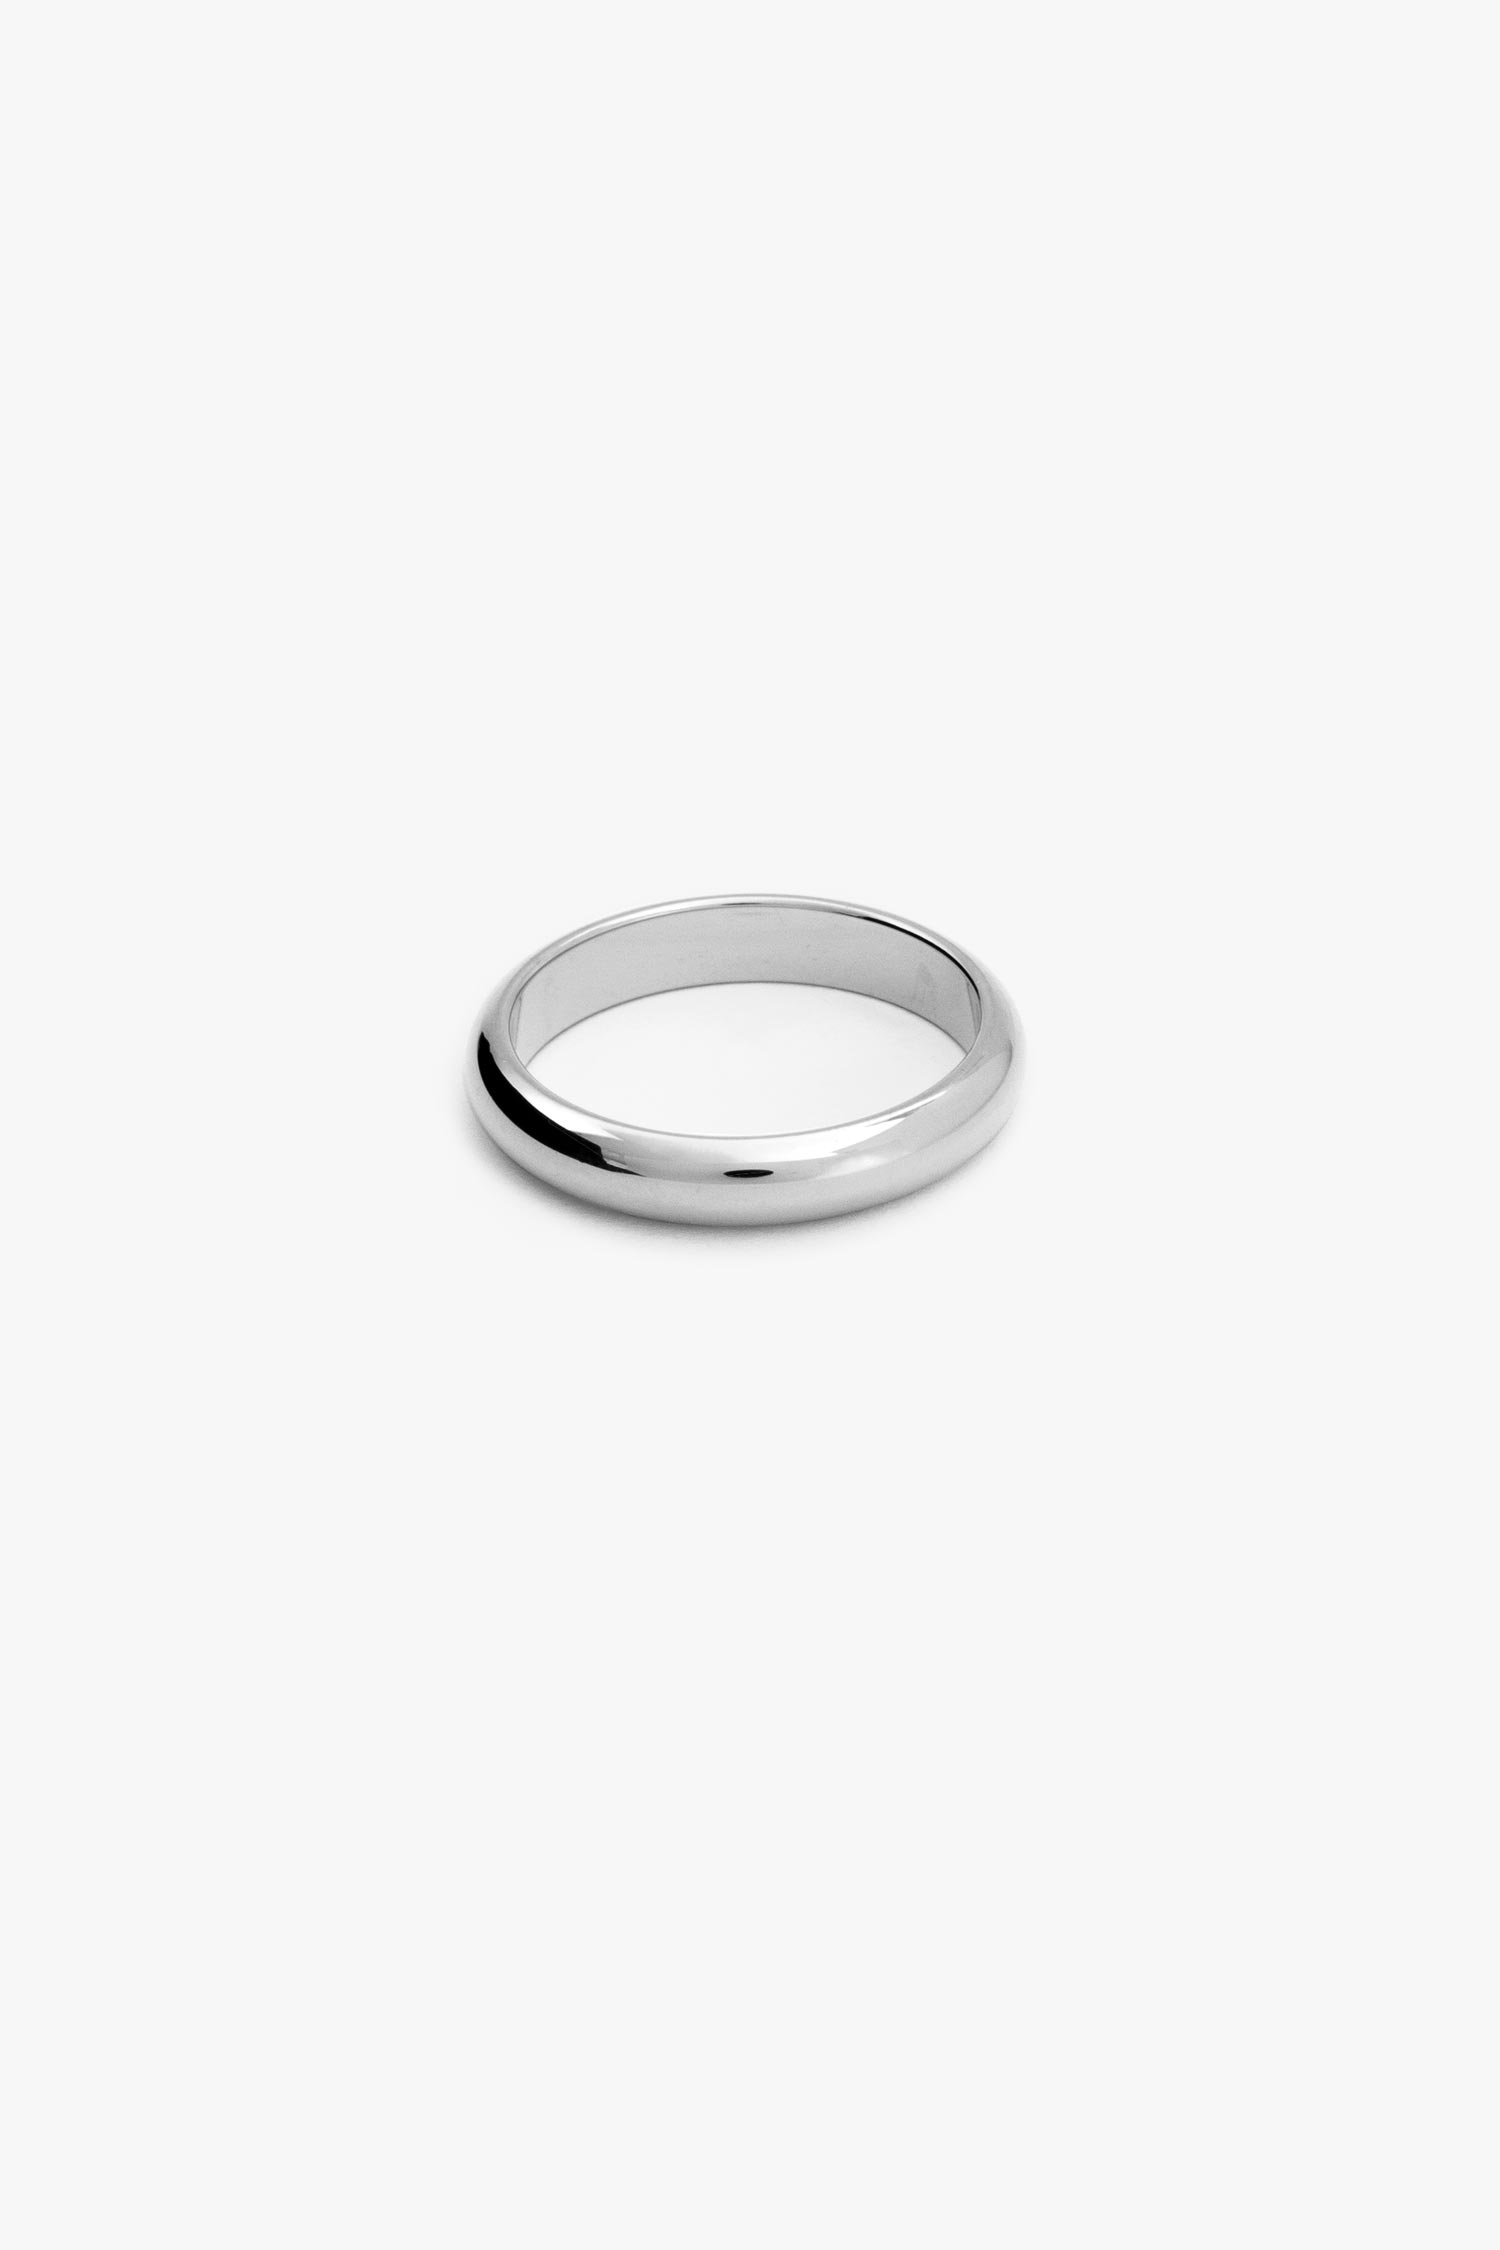 Beadnova Anéis de salto aberto (prata), 300pcs, 5mm, 1 : :  Cozinha